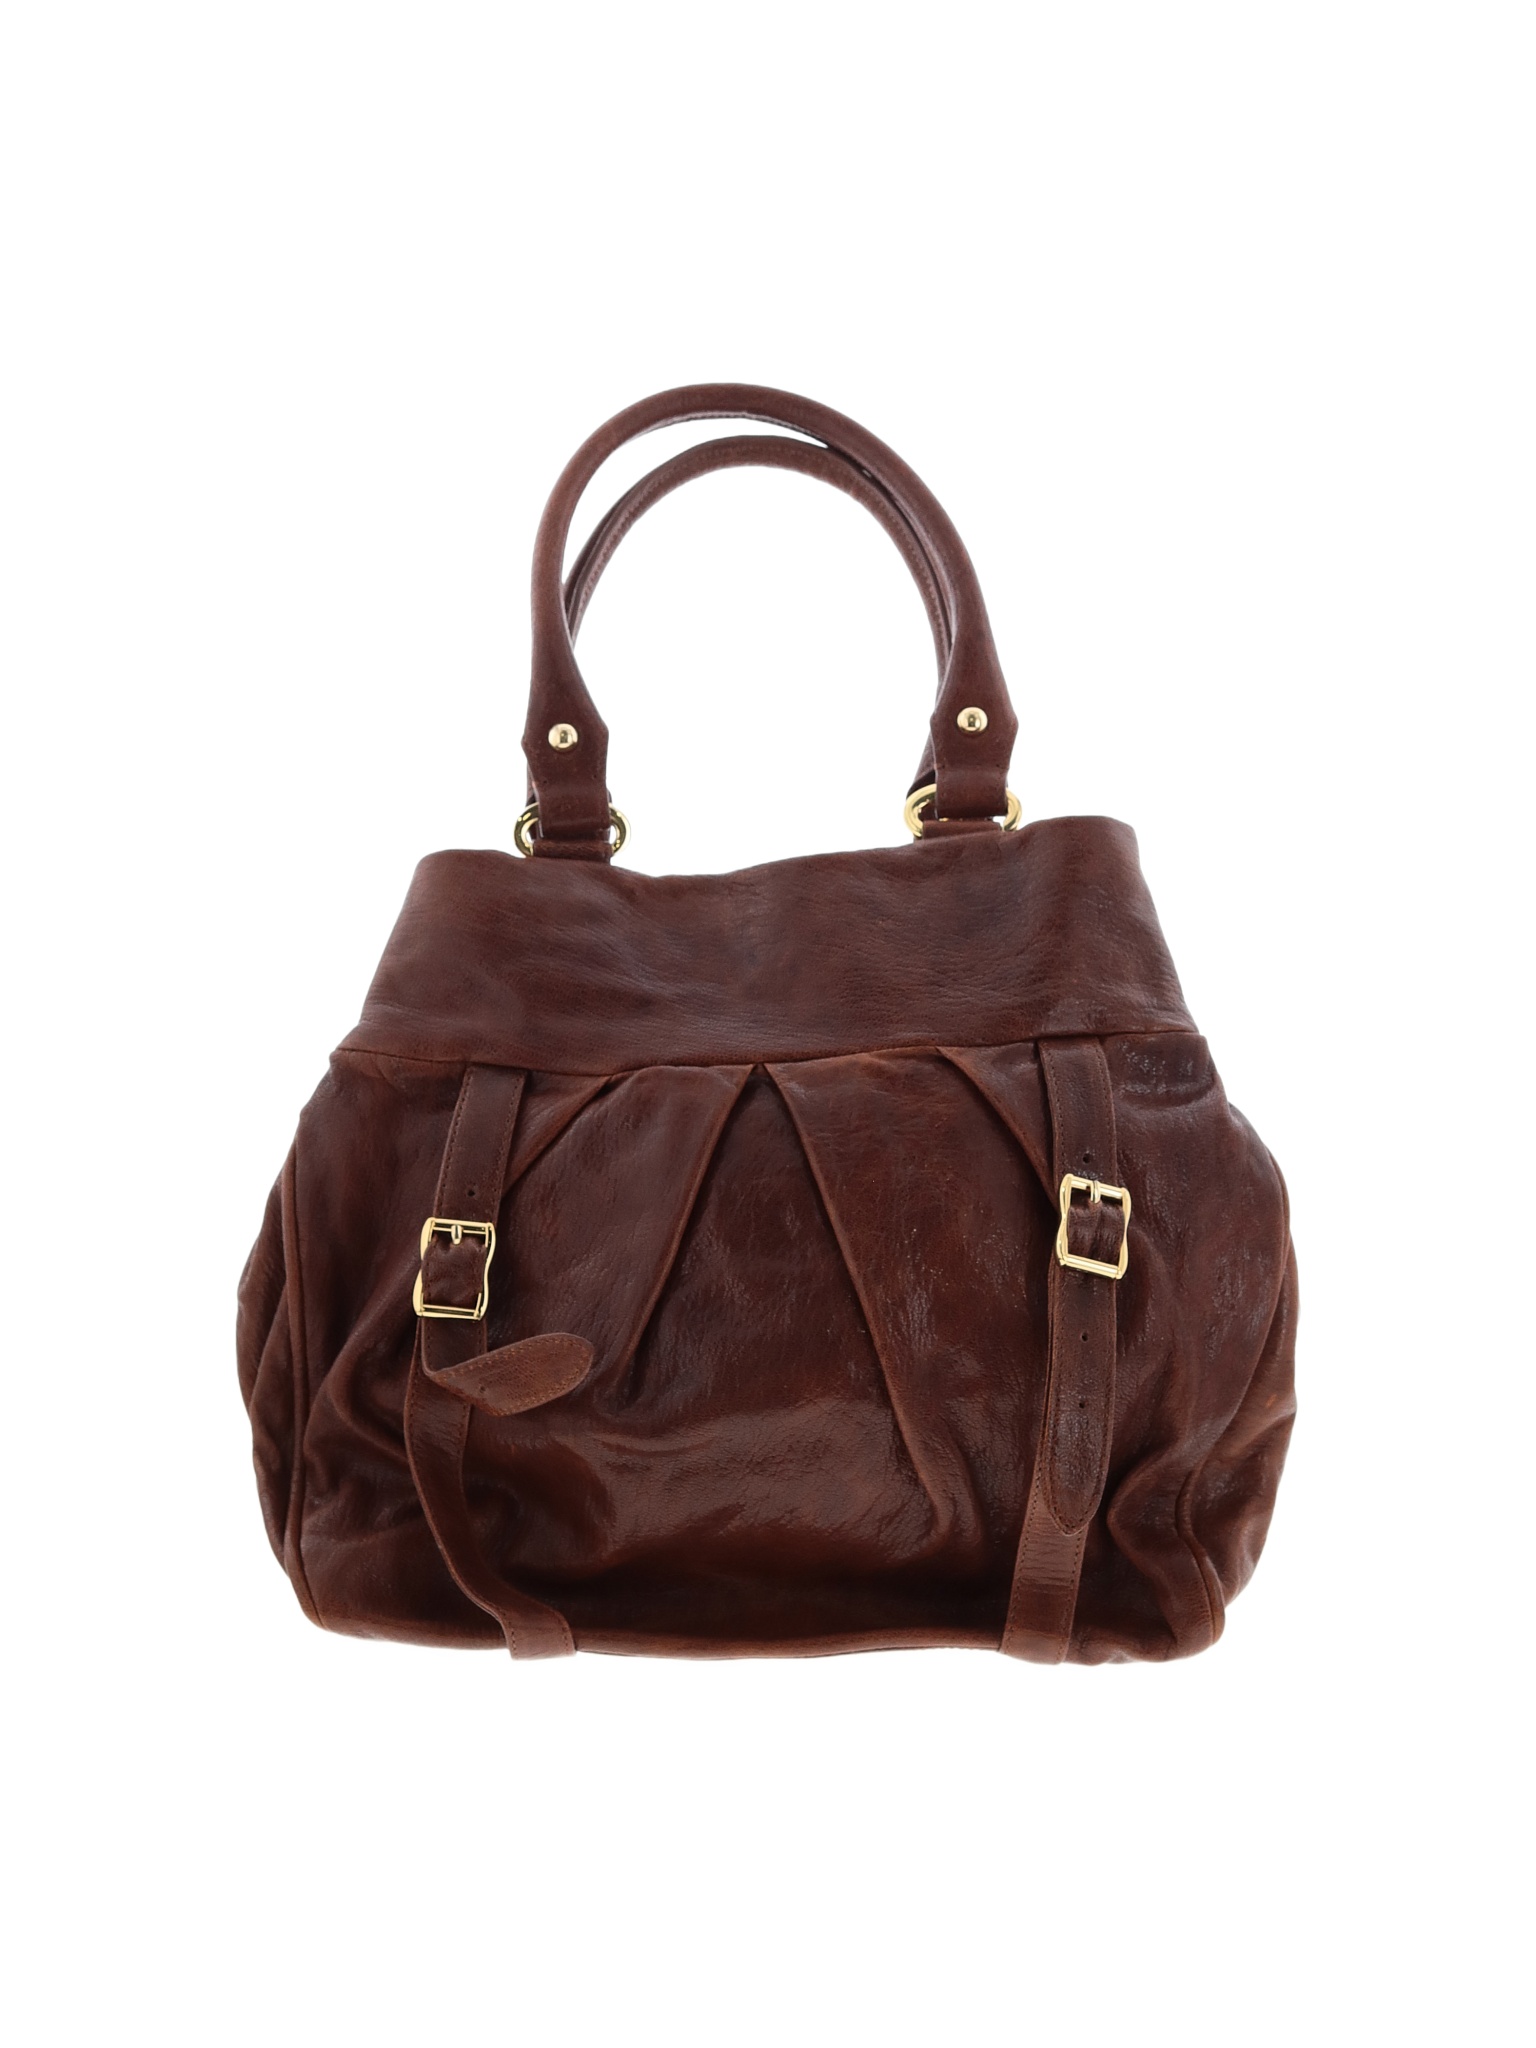 Treesje Leather Satchel: Brown Print Bags, thredUP